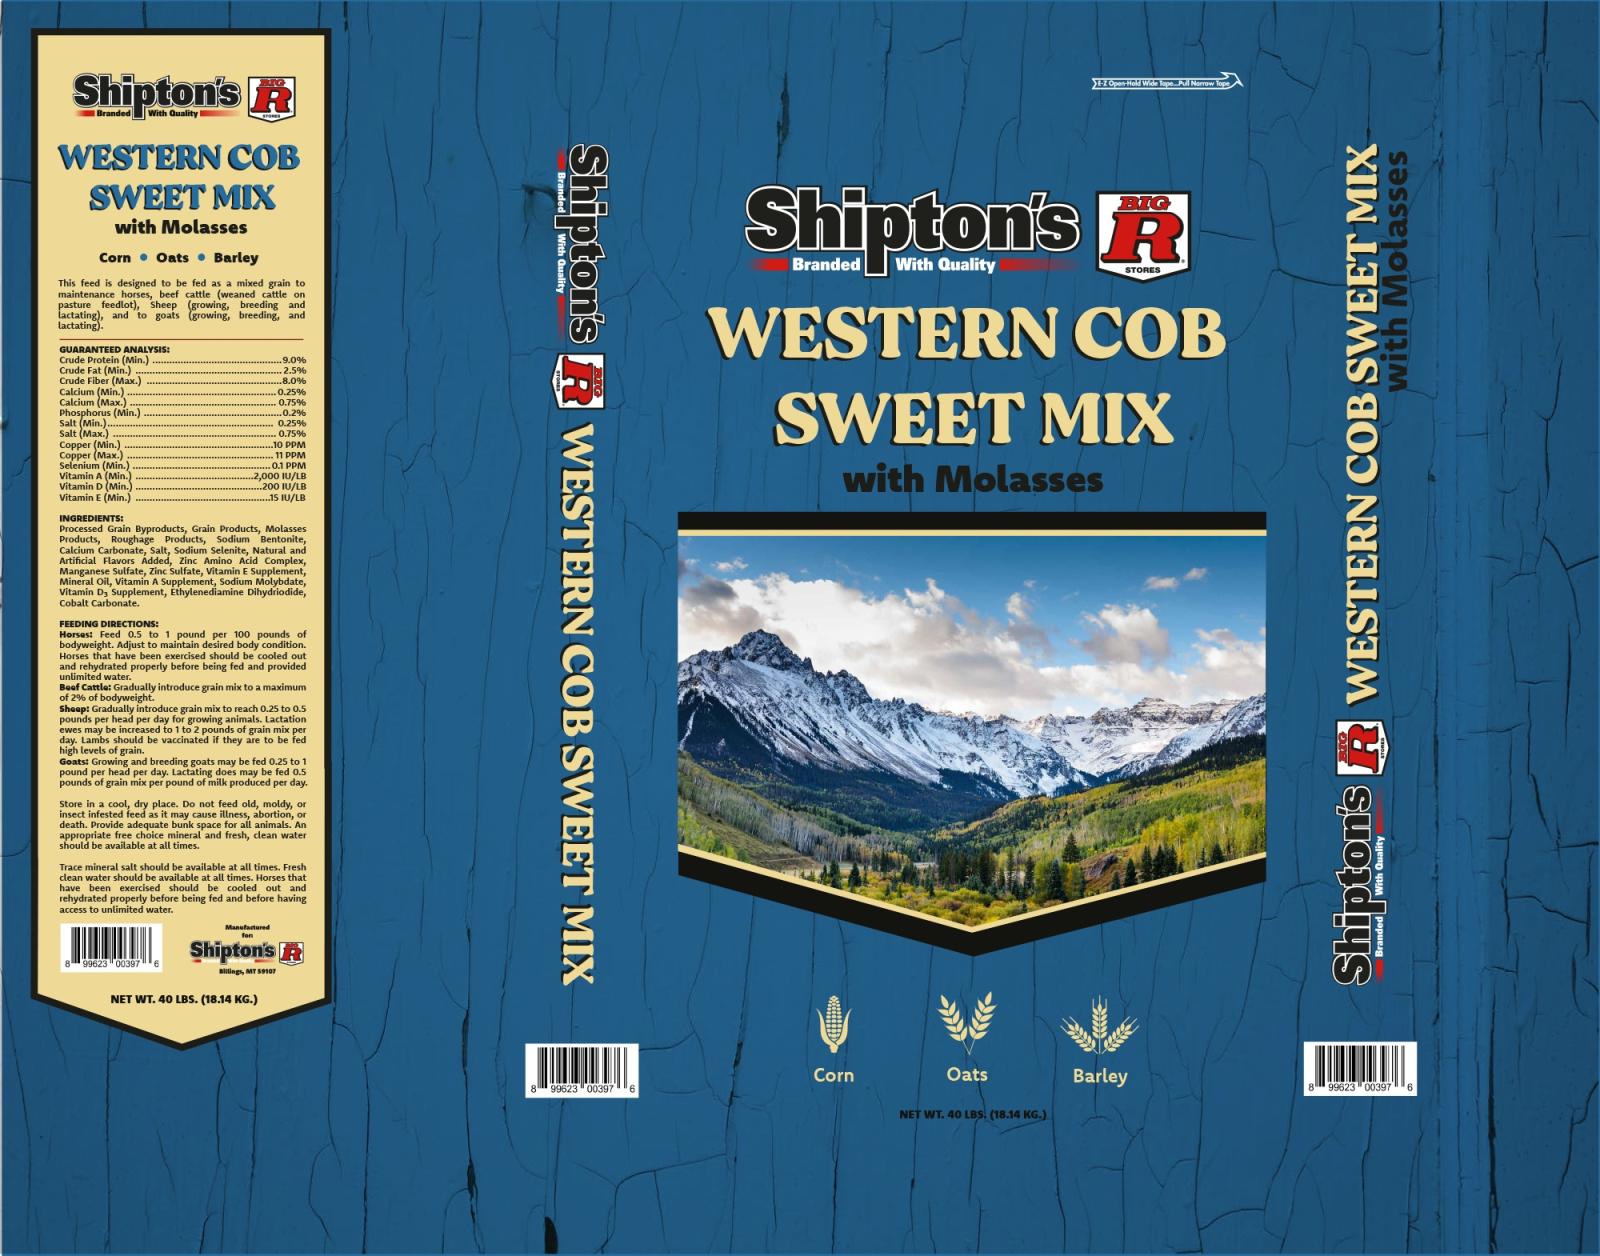 Shipton's Big R Western COB Sweet Mix with Molasses